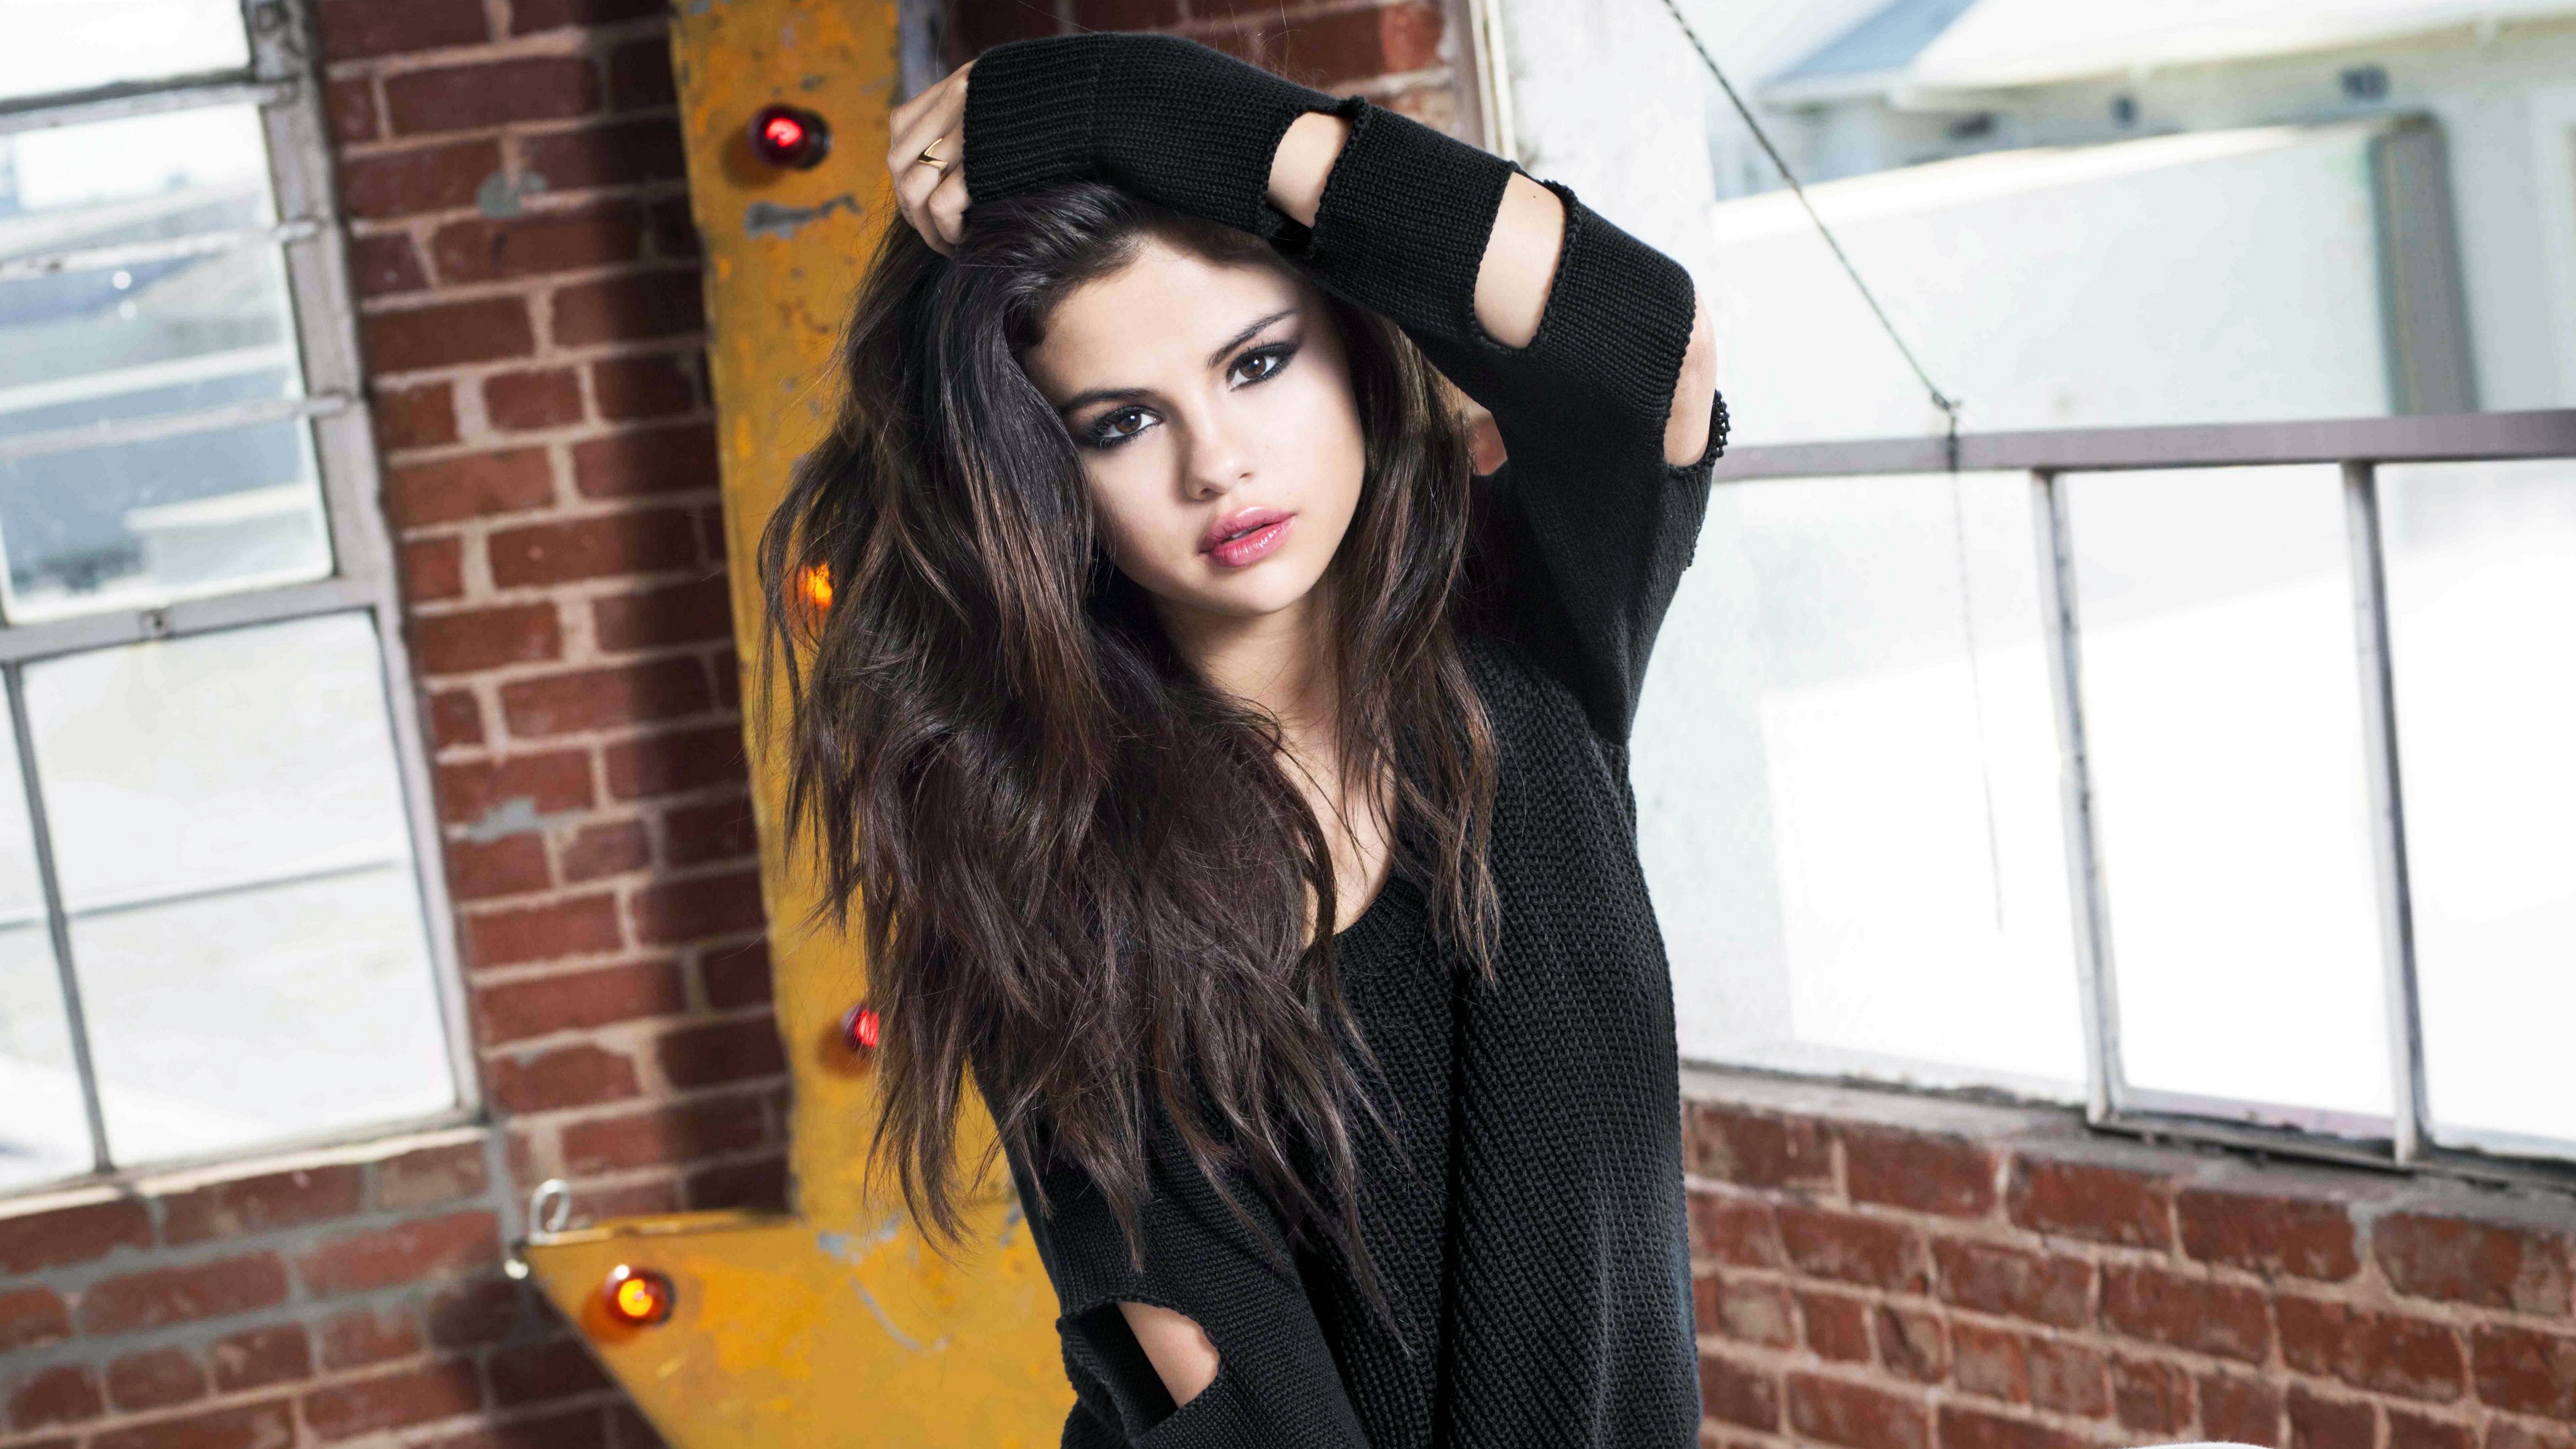 Selena Gomez 134 Wallpaper in jpg format for free download